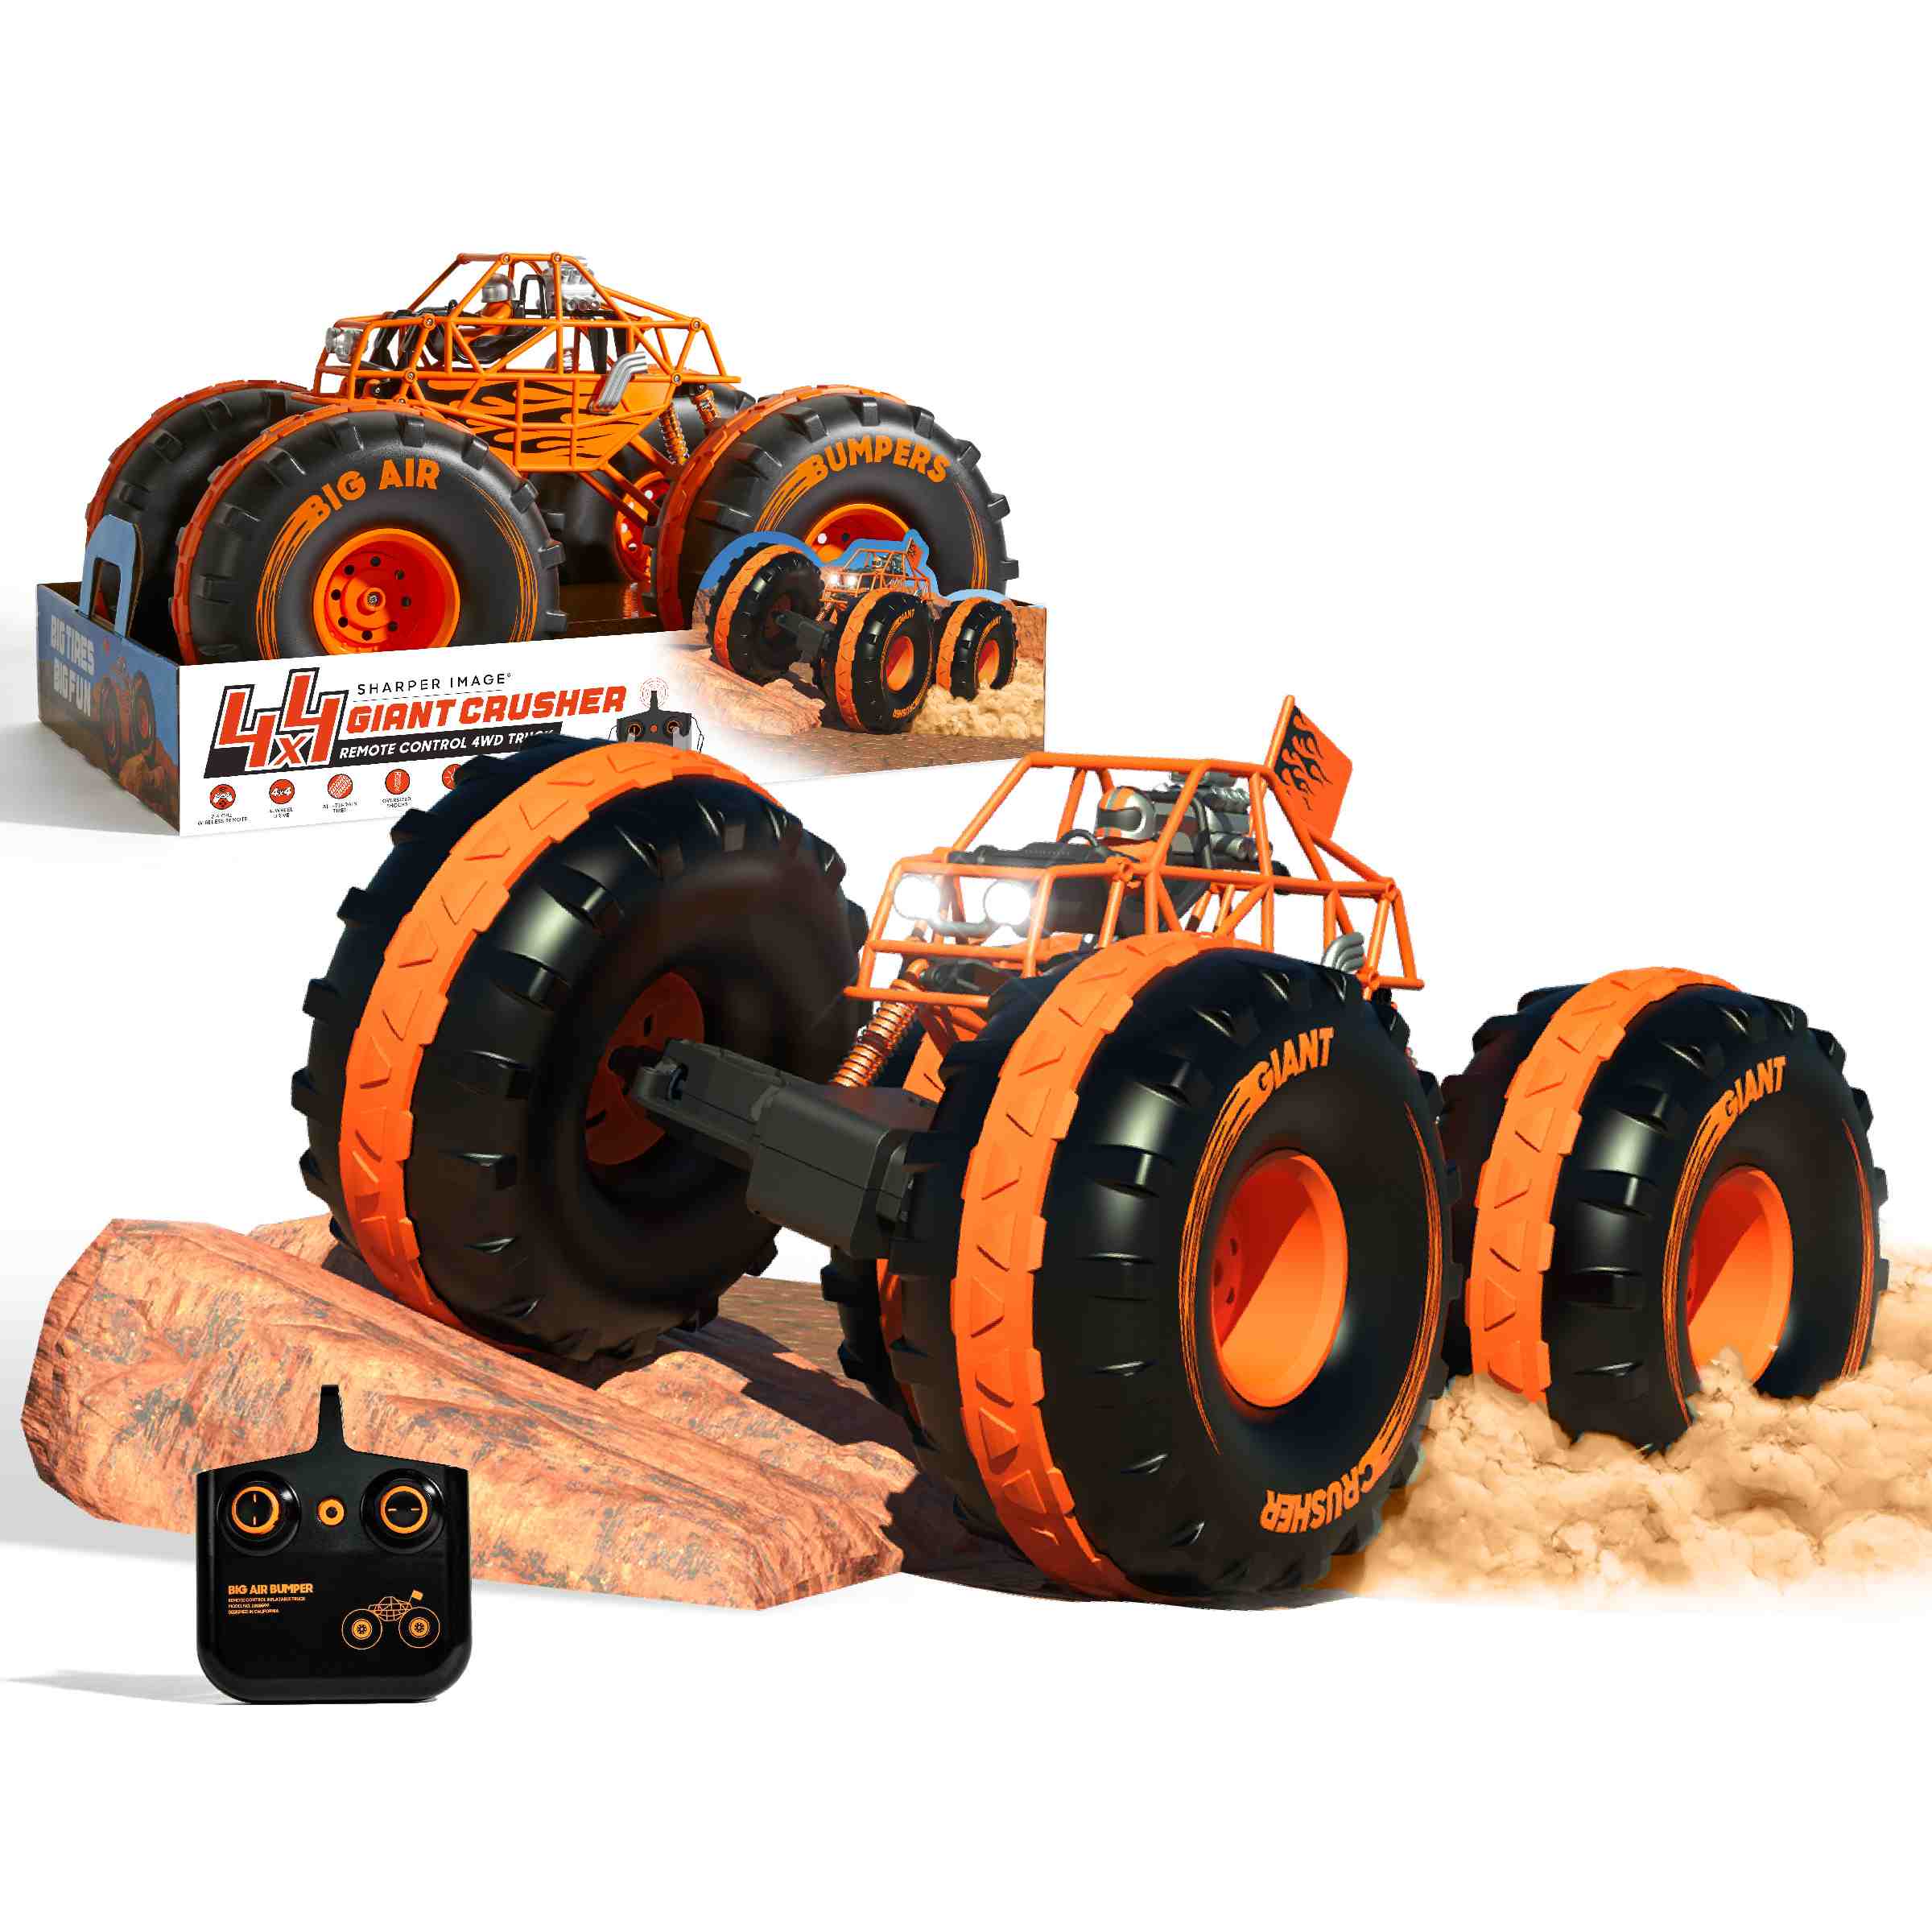 Toy rc 4wd big wheel truck - Sharper Image